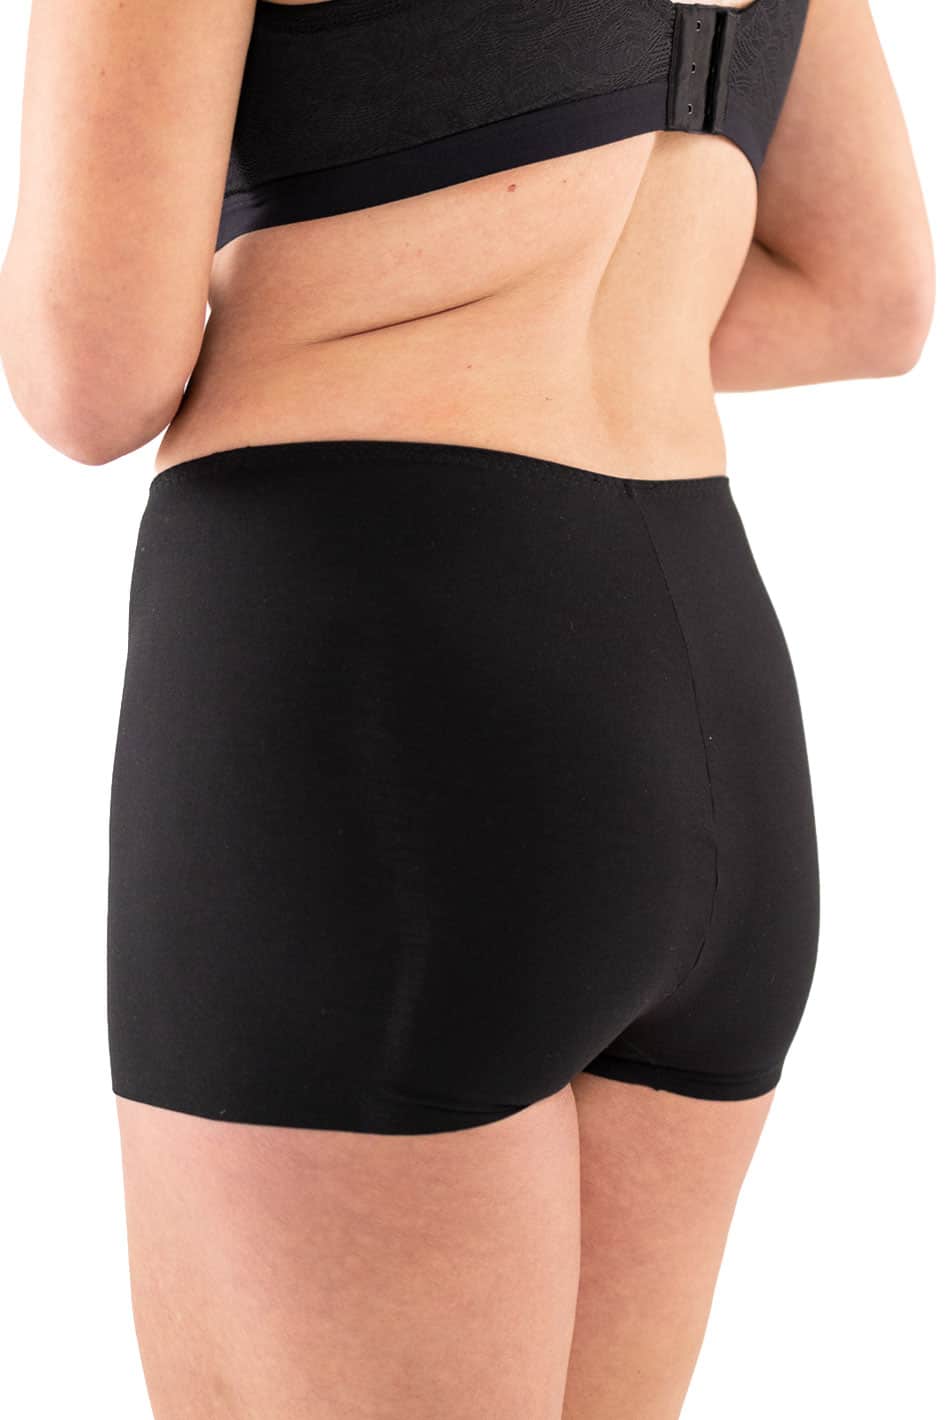 Dirk41 Workout Sweat Waist Trainer Women Seamless Boyshorts Panties Anti  Chafing Underwear Shorts Tummy Tucking (Black, M) at  Women's  Clothing store